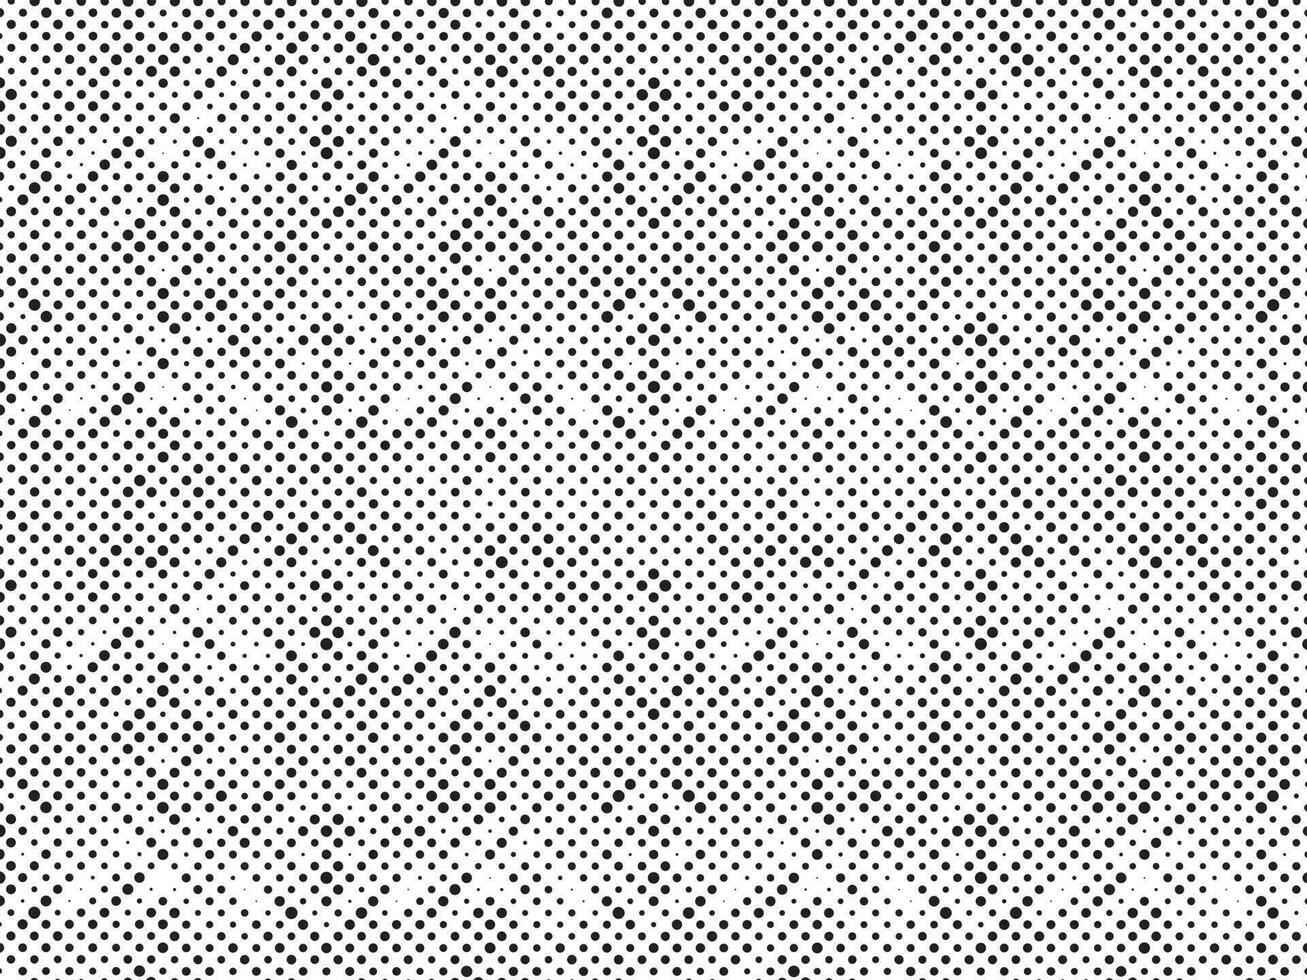 Black and White Halftone Grid. Modern Minimalist Geometric Pattern vector